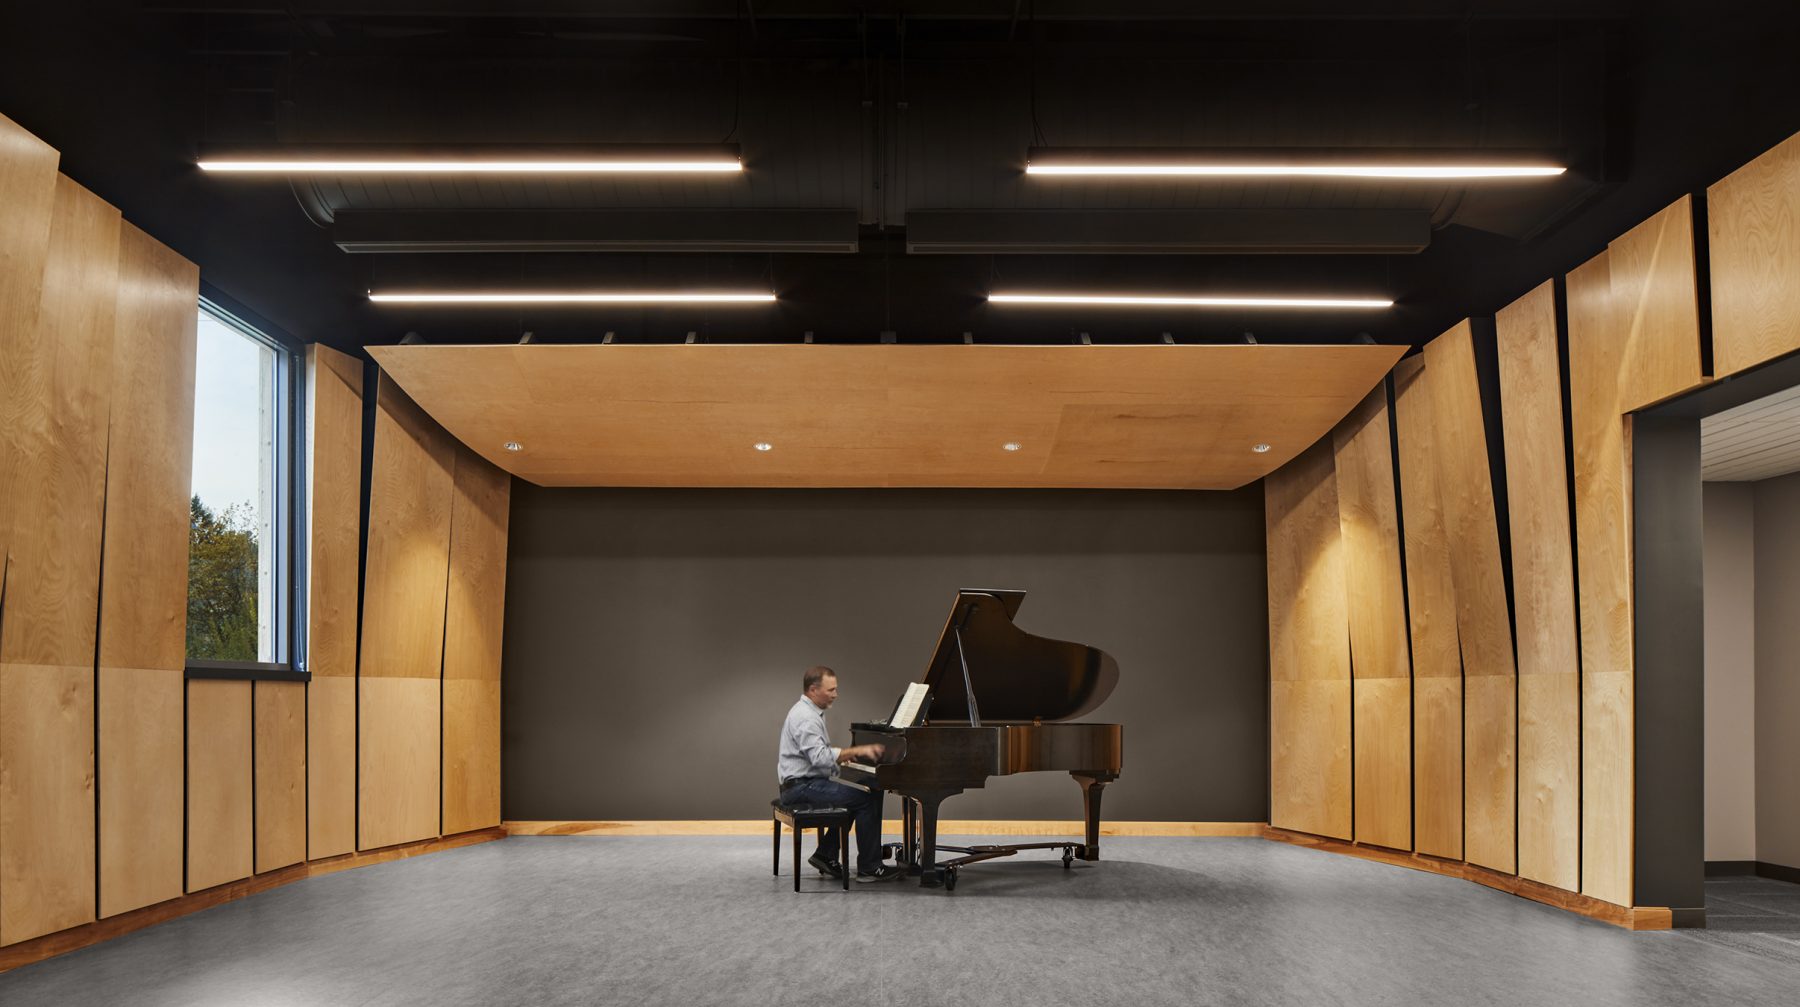 Brattleboro Music Center recital hall with piano